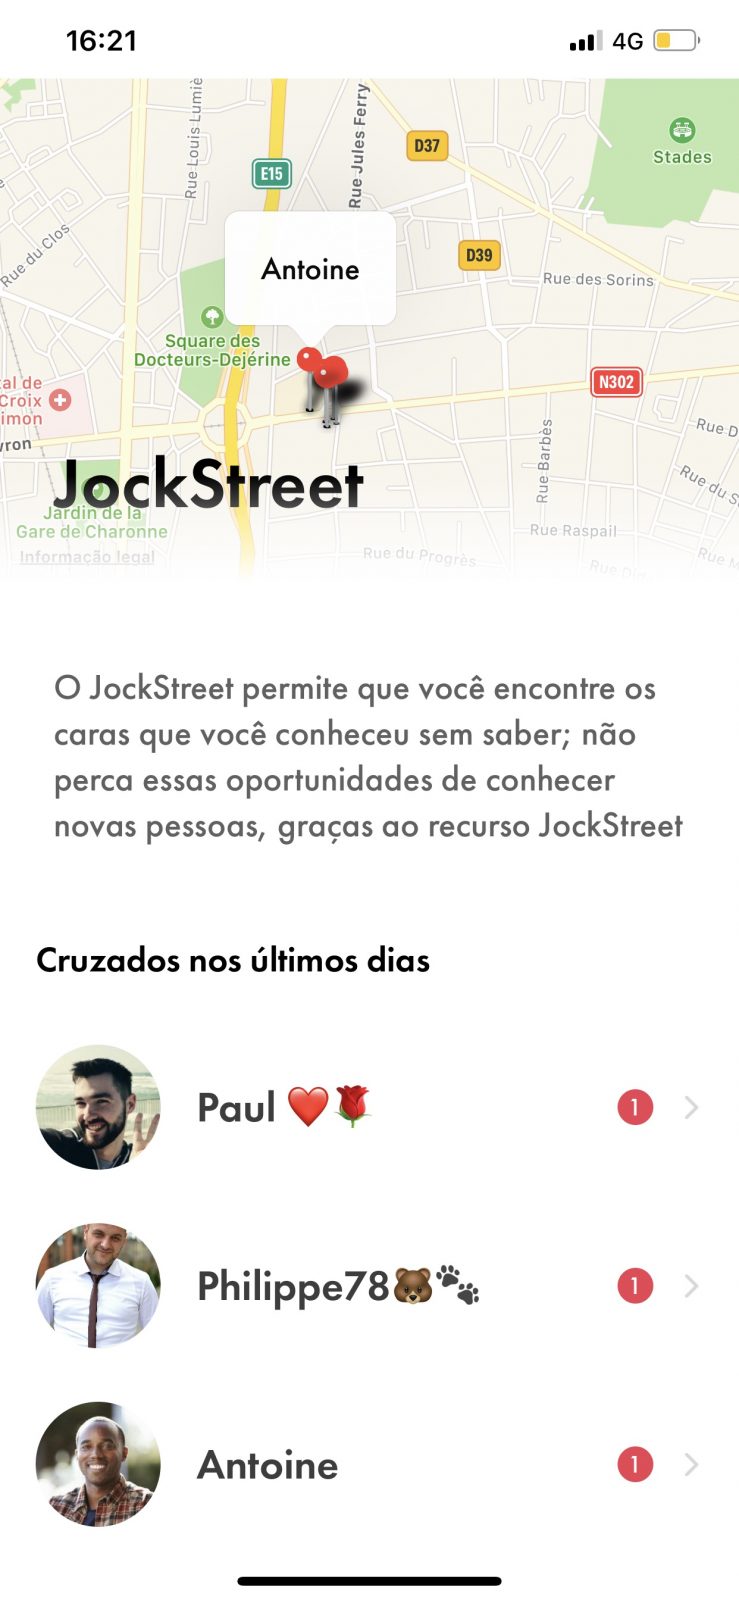 JockStreet